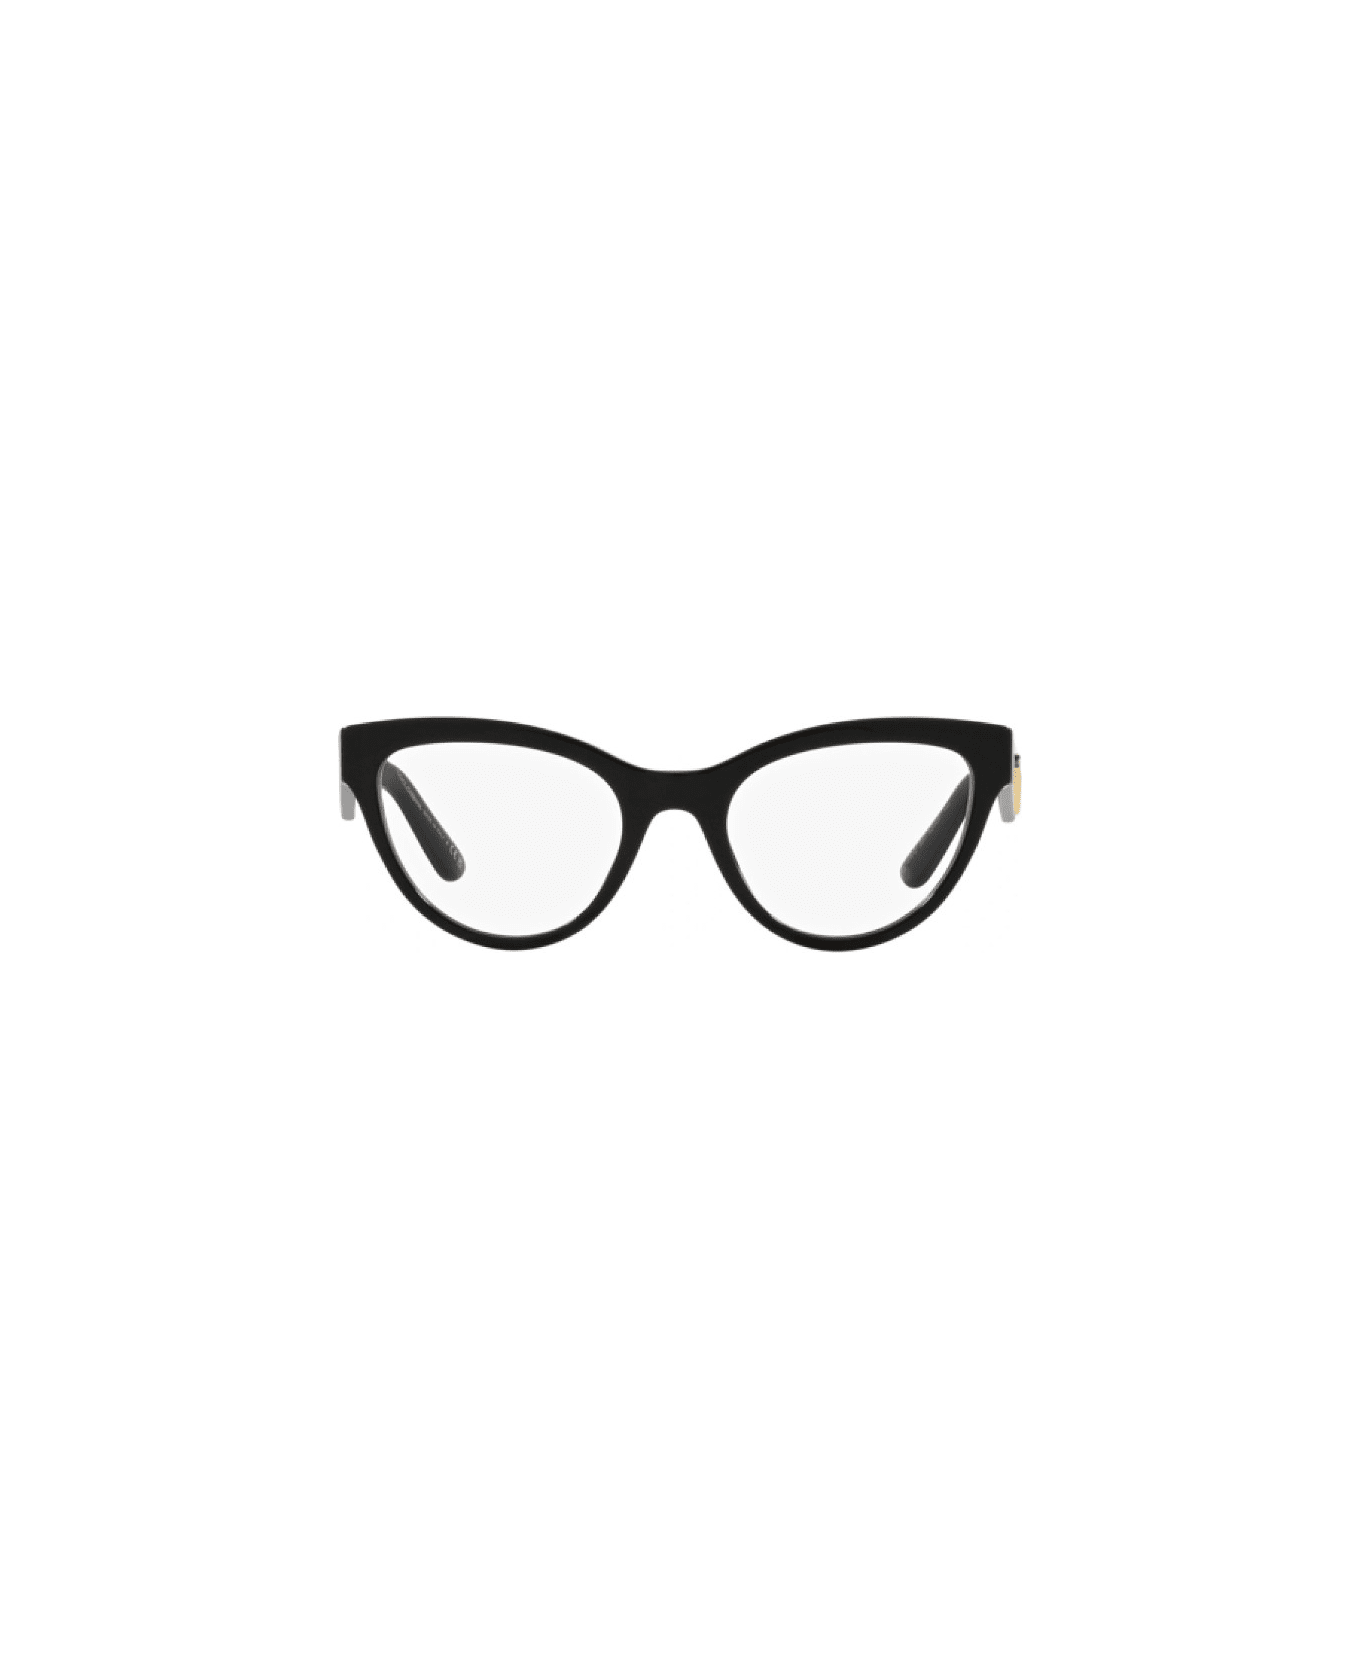 Dolce & Gabbana Eyewear DG3372 501 Glasses - Nero